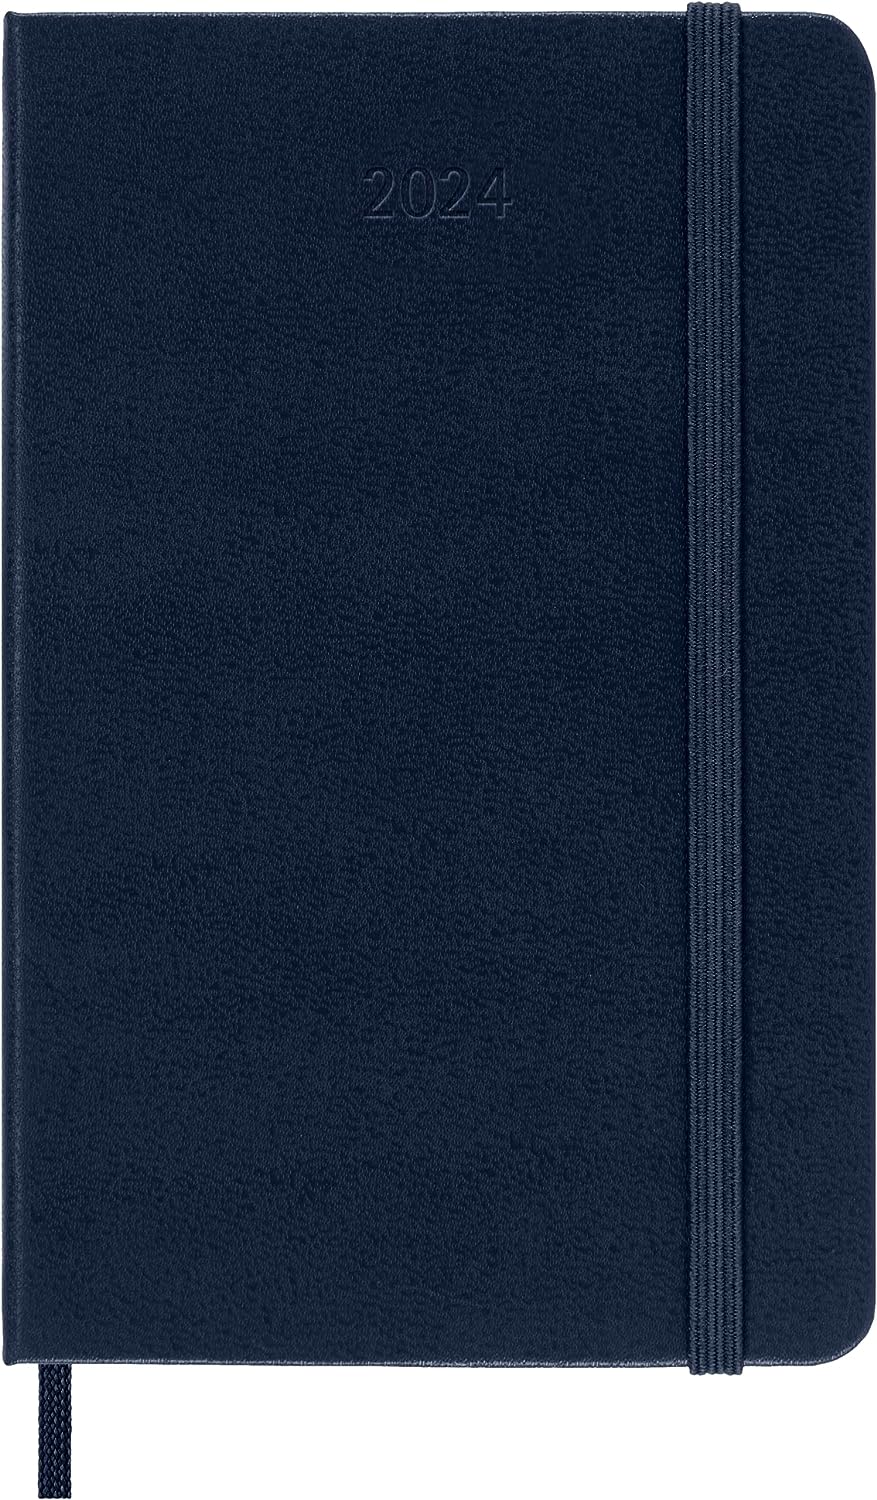 Agenda 2024 - 12-Month Daily - Pocket, Hard Cover - Sapphire Blue | Moleskine